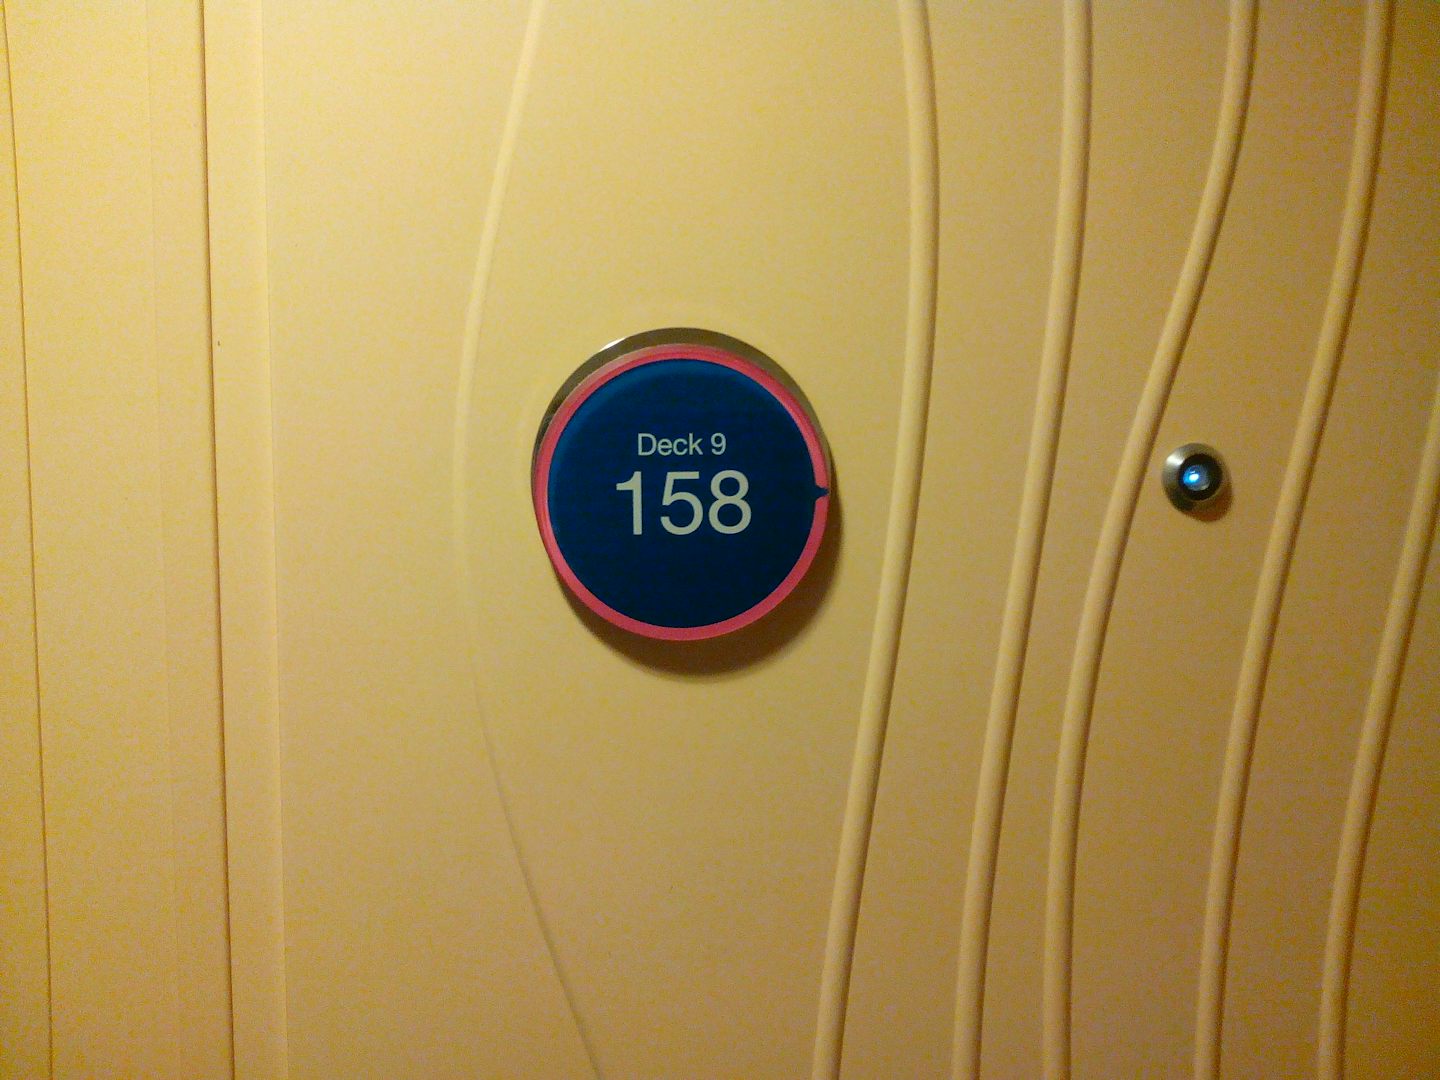 Deck 9 room 158 close to elevators no noise.  very convenient.